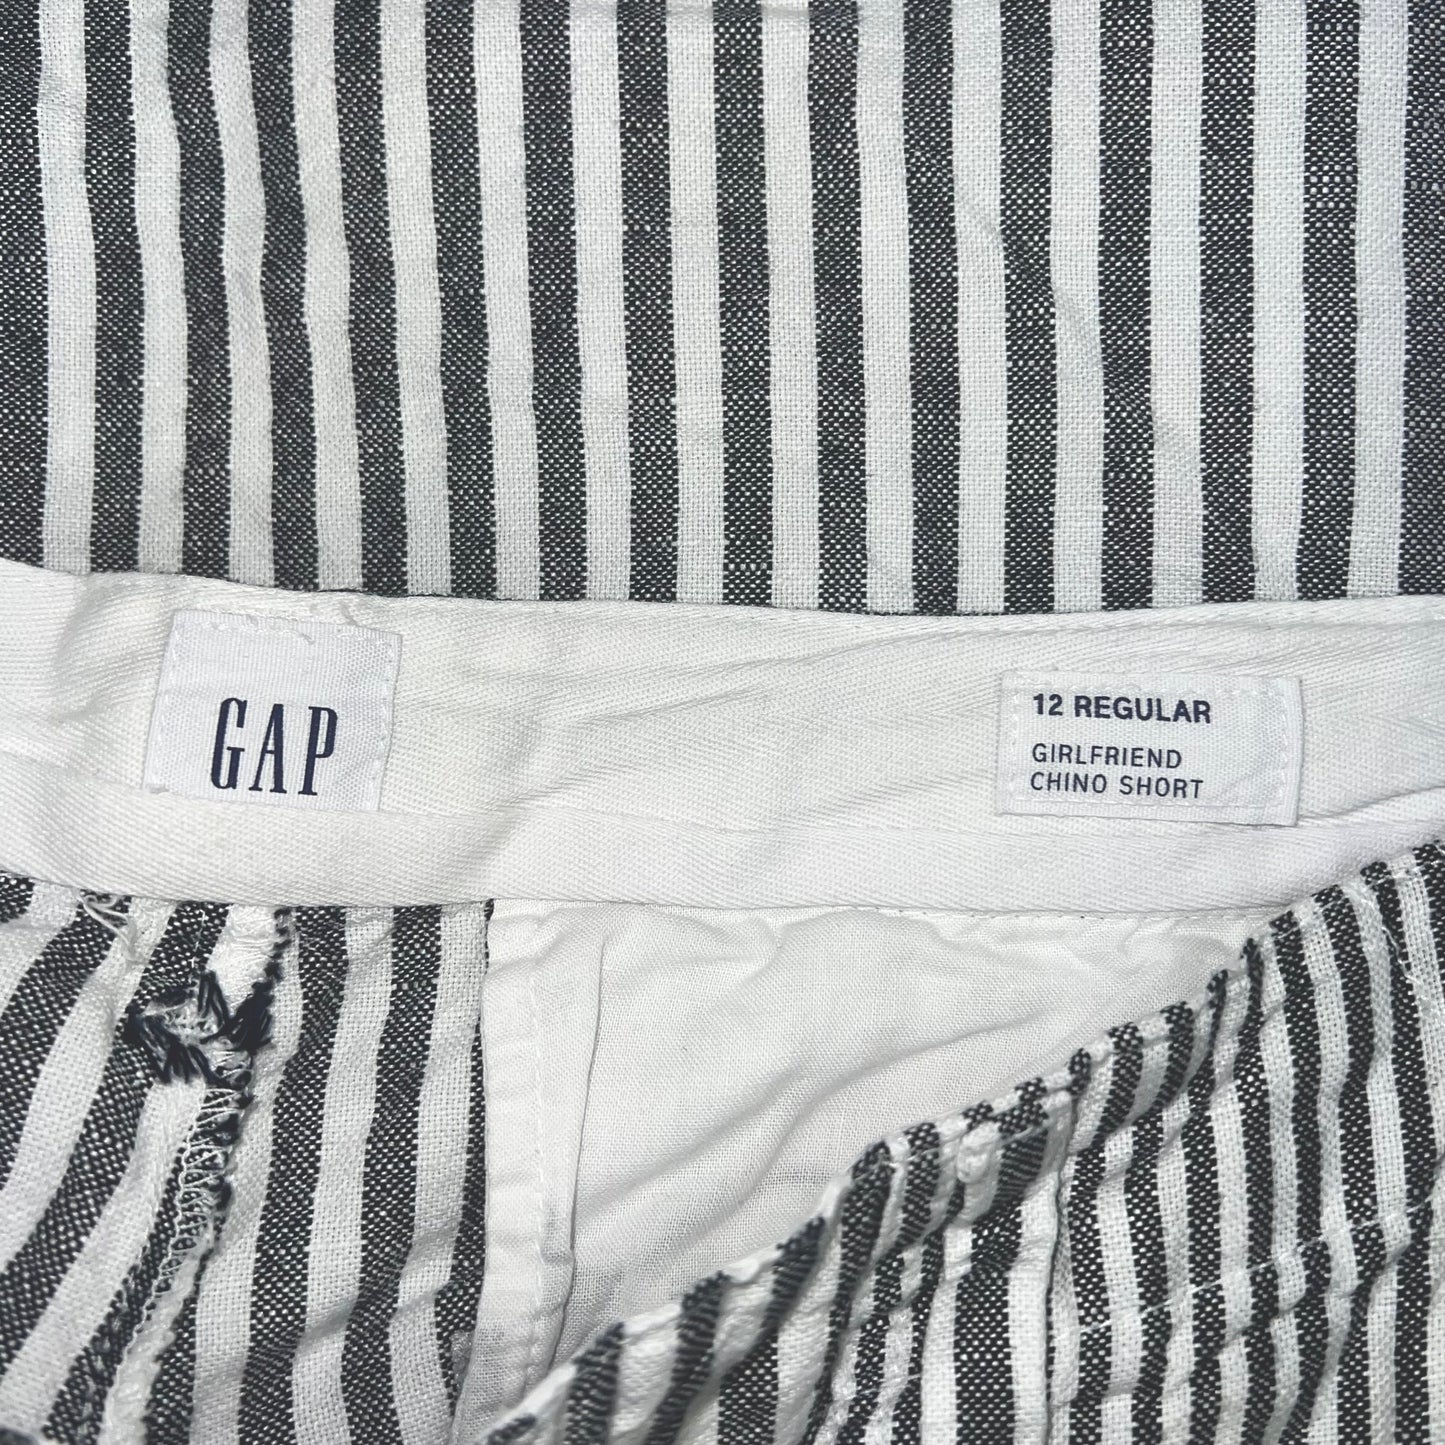 Striped Pattern Shorts By Gap, Size: L